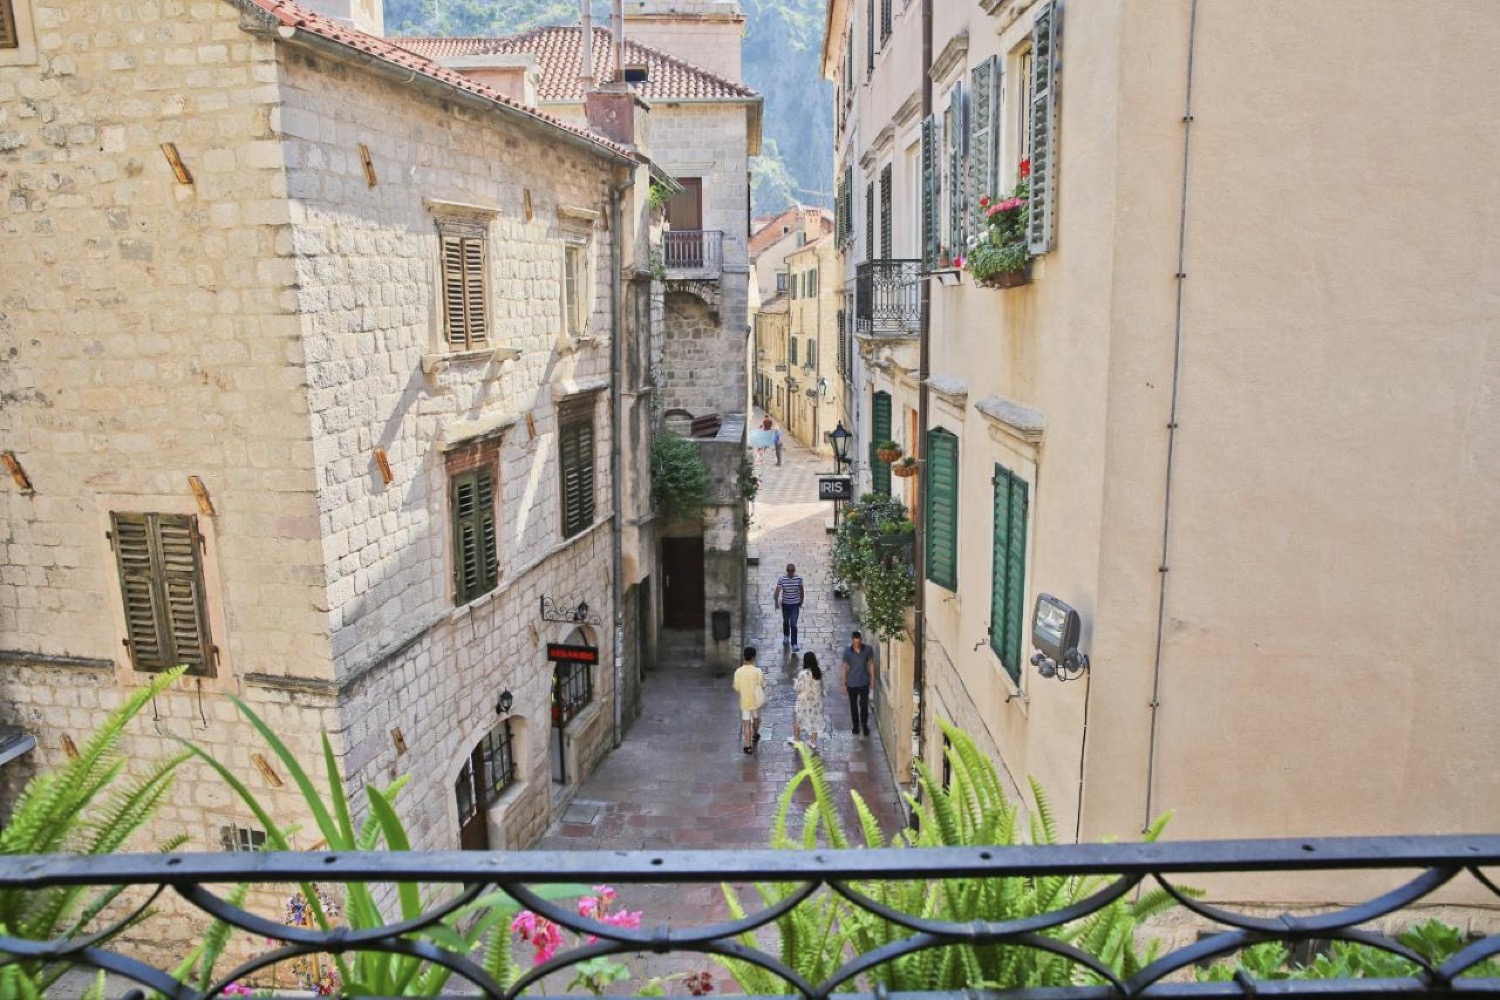 Rekomendowane hotele w Kotorze.